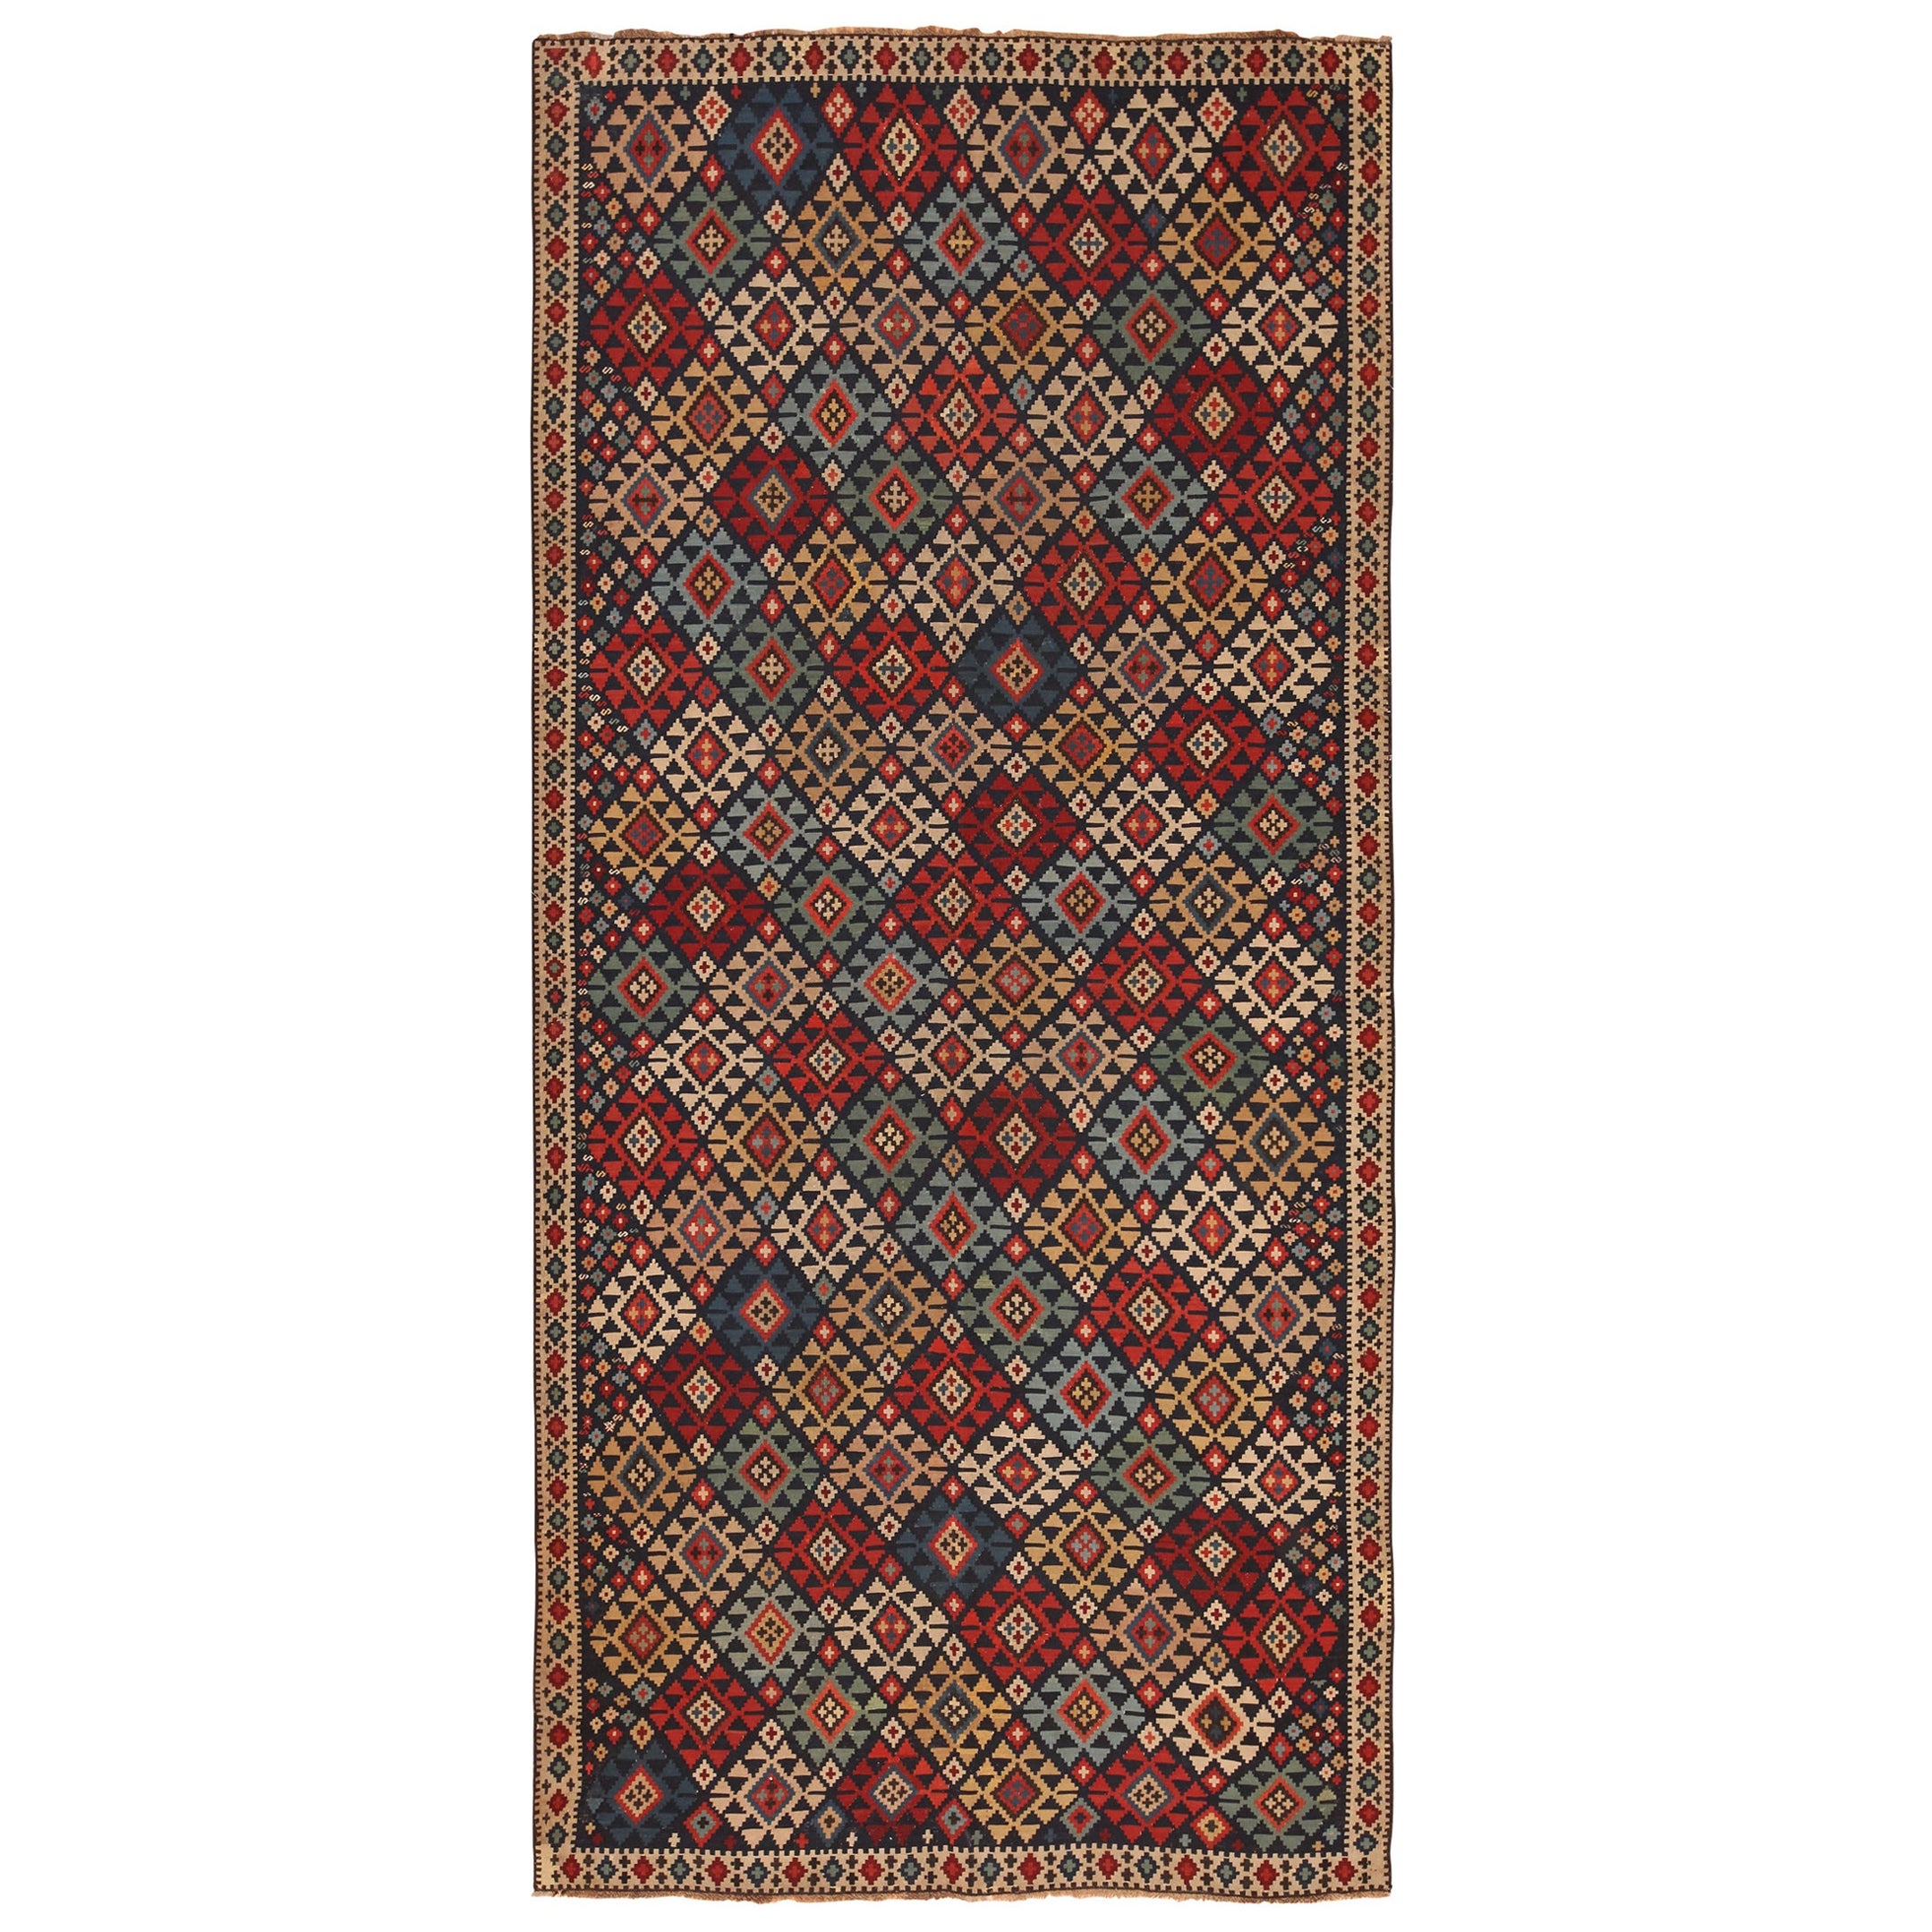 What is a boho rug?